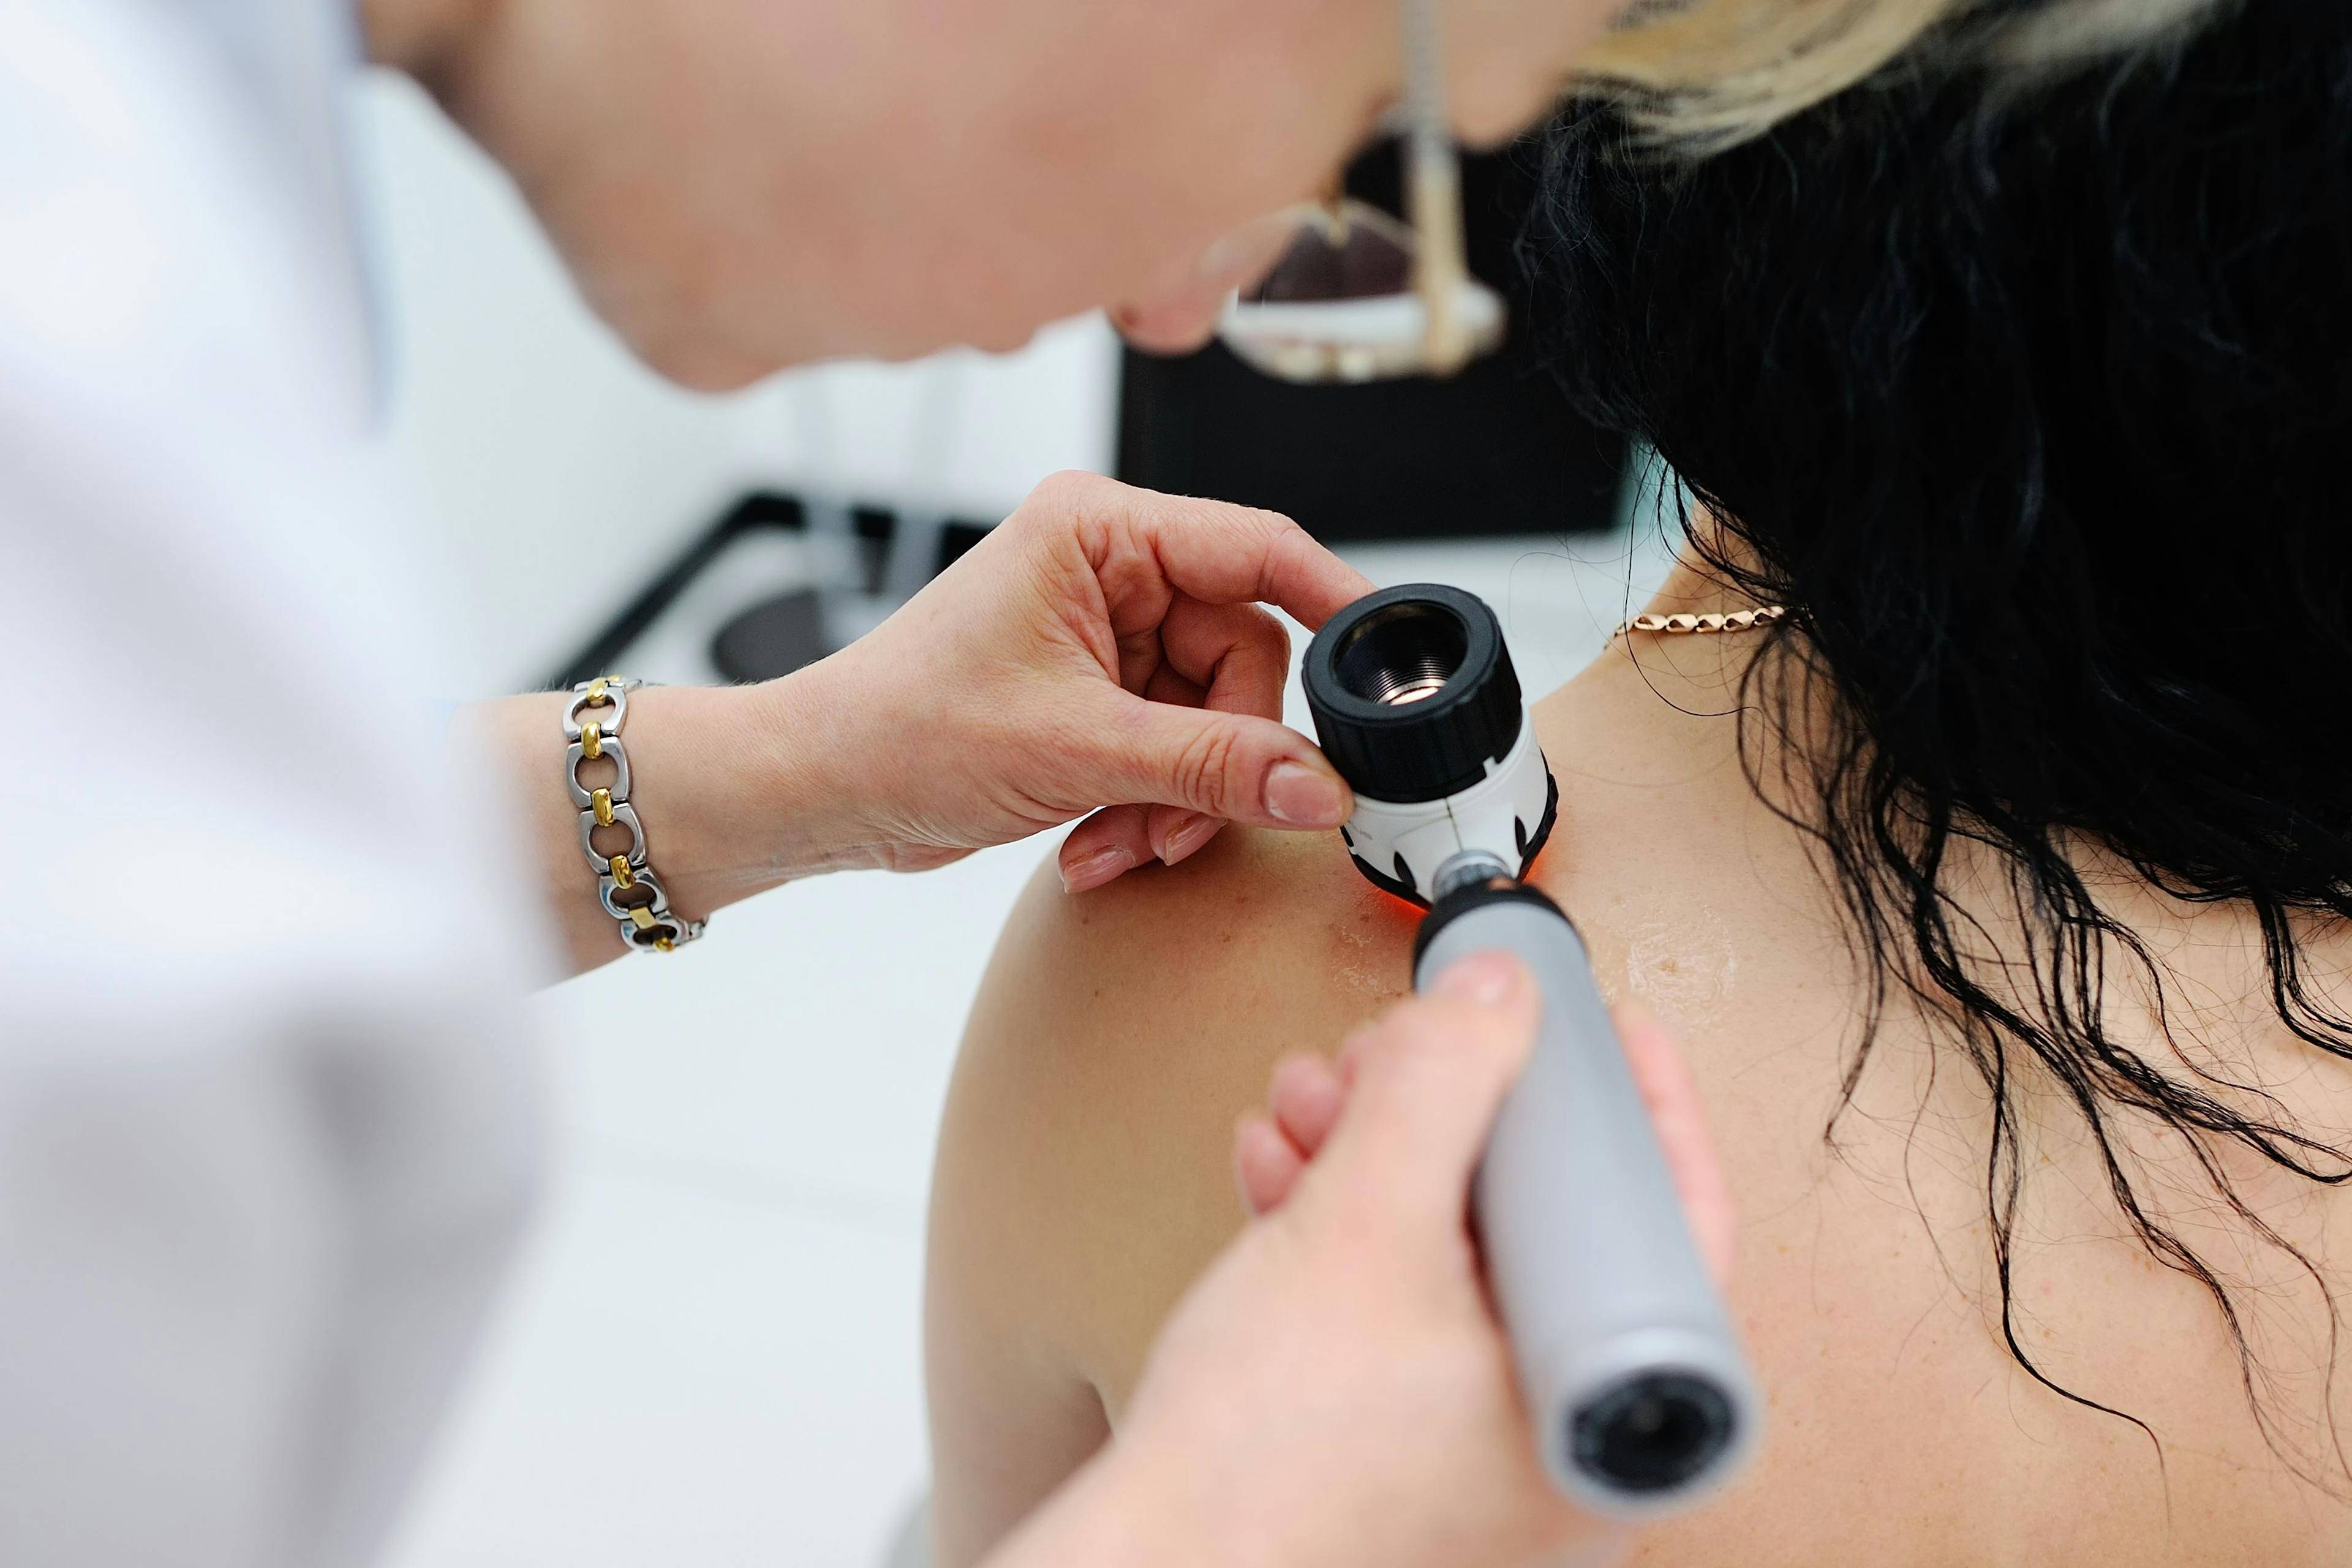 Physician examining melanoma | Image credit: Evgeniy Kalinovskiy - stock.adobe.com